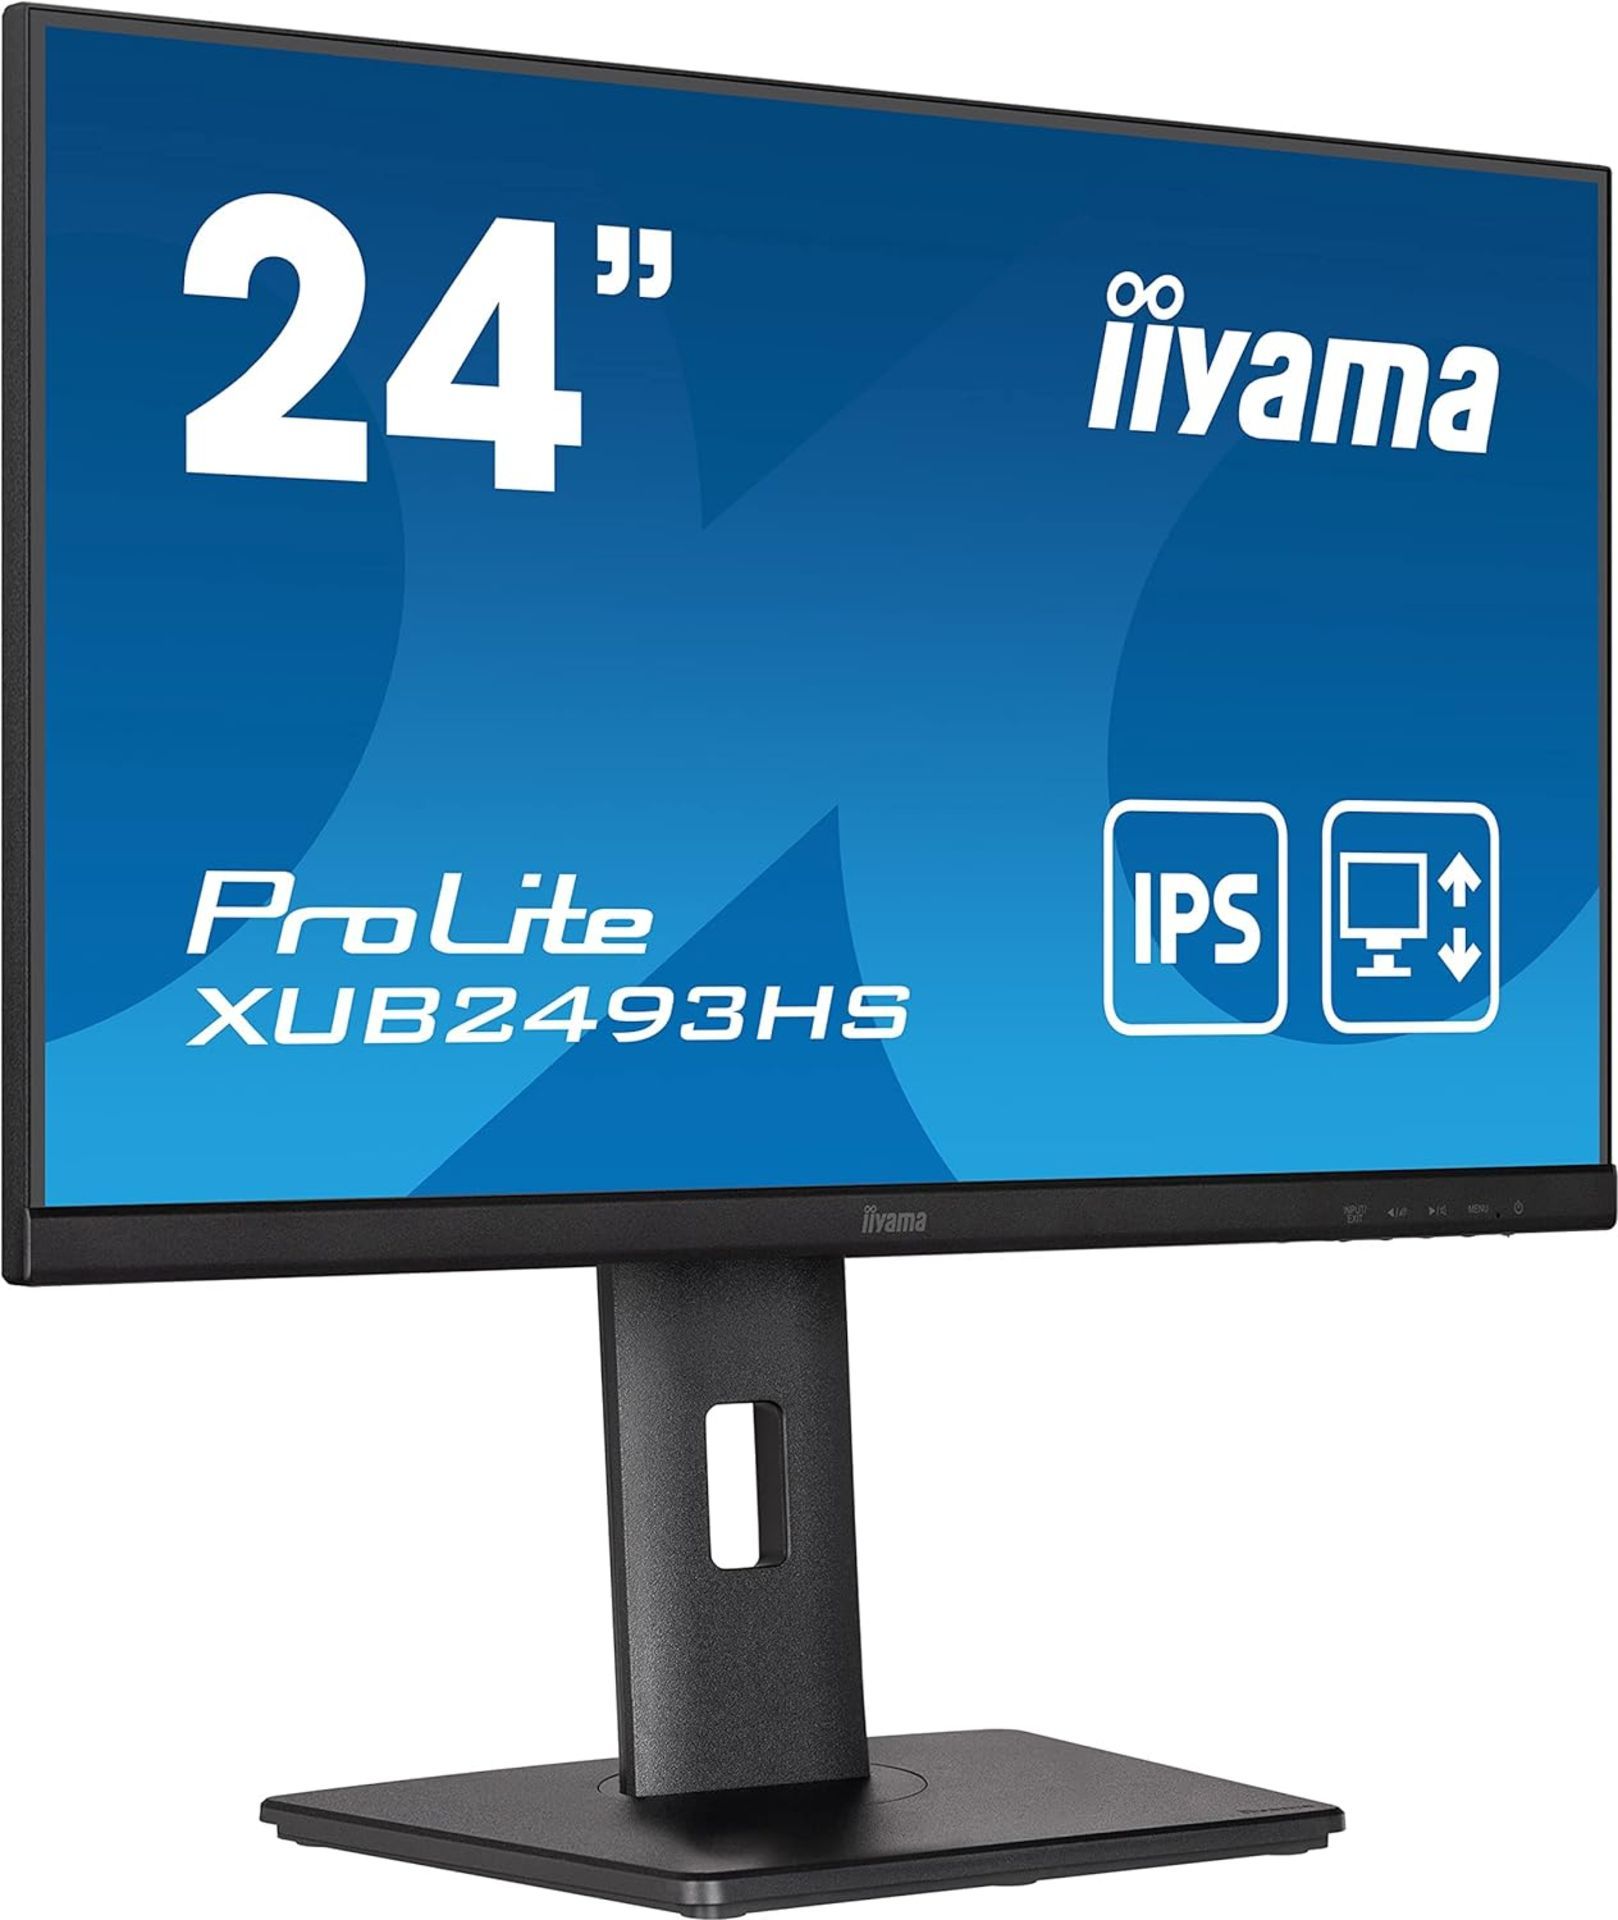 (GRADE A) IIYAMA ProLite XUB2493HS 24 Inch IPS LCD with Slim Bezel. RRP £129.99. (R8R). 4ms, Full HD